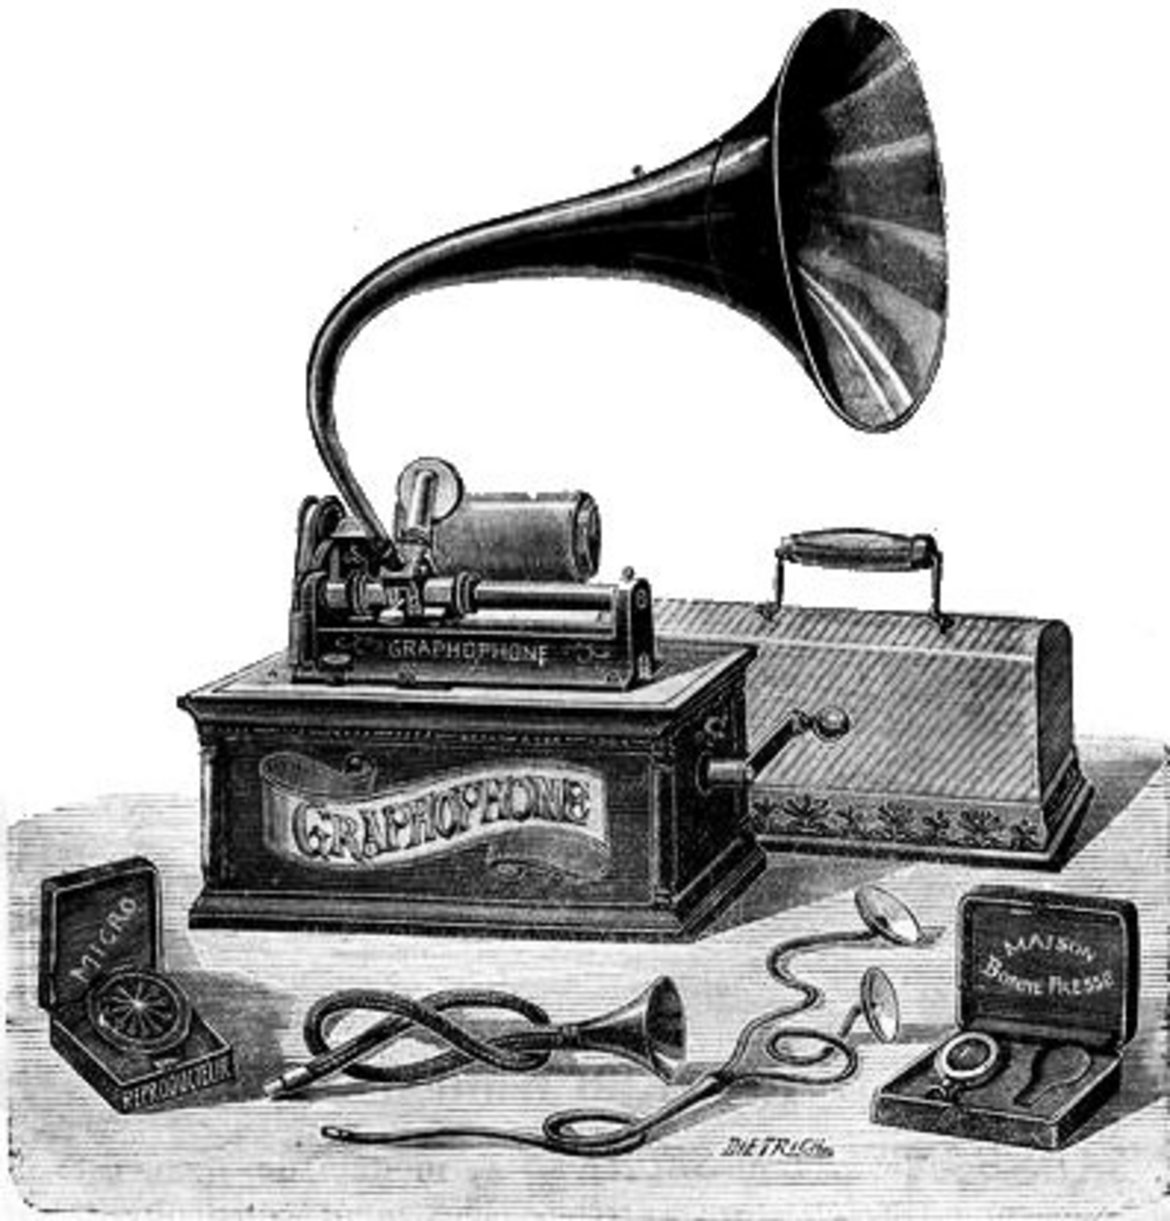 Graphophone, 1901